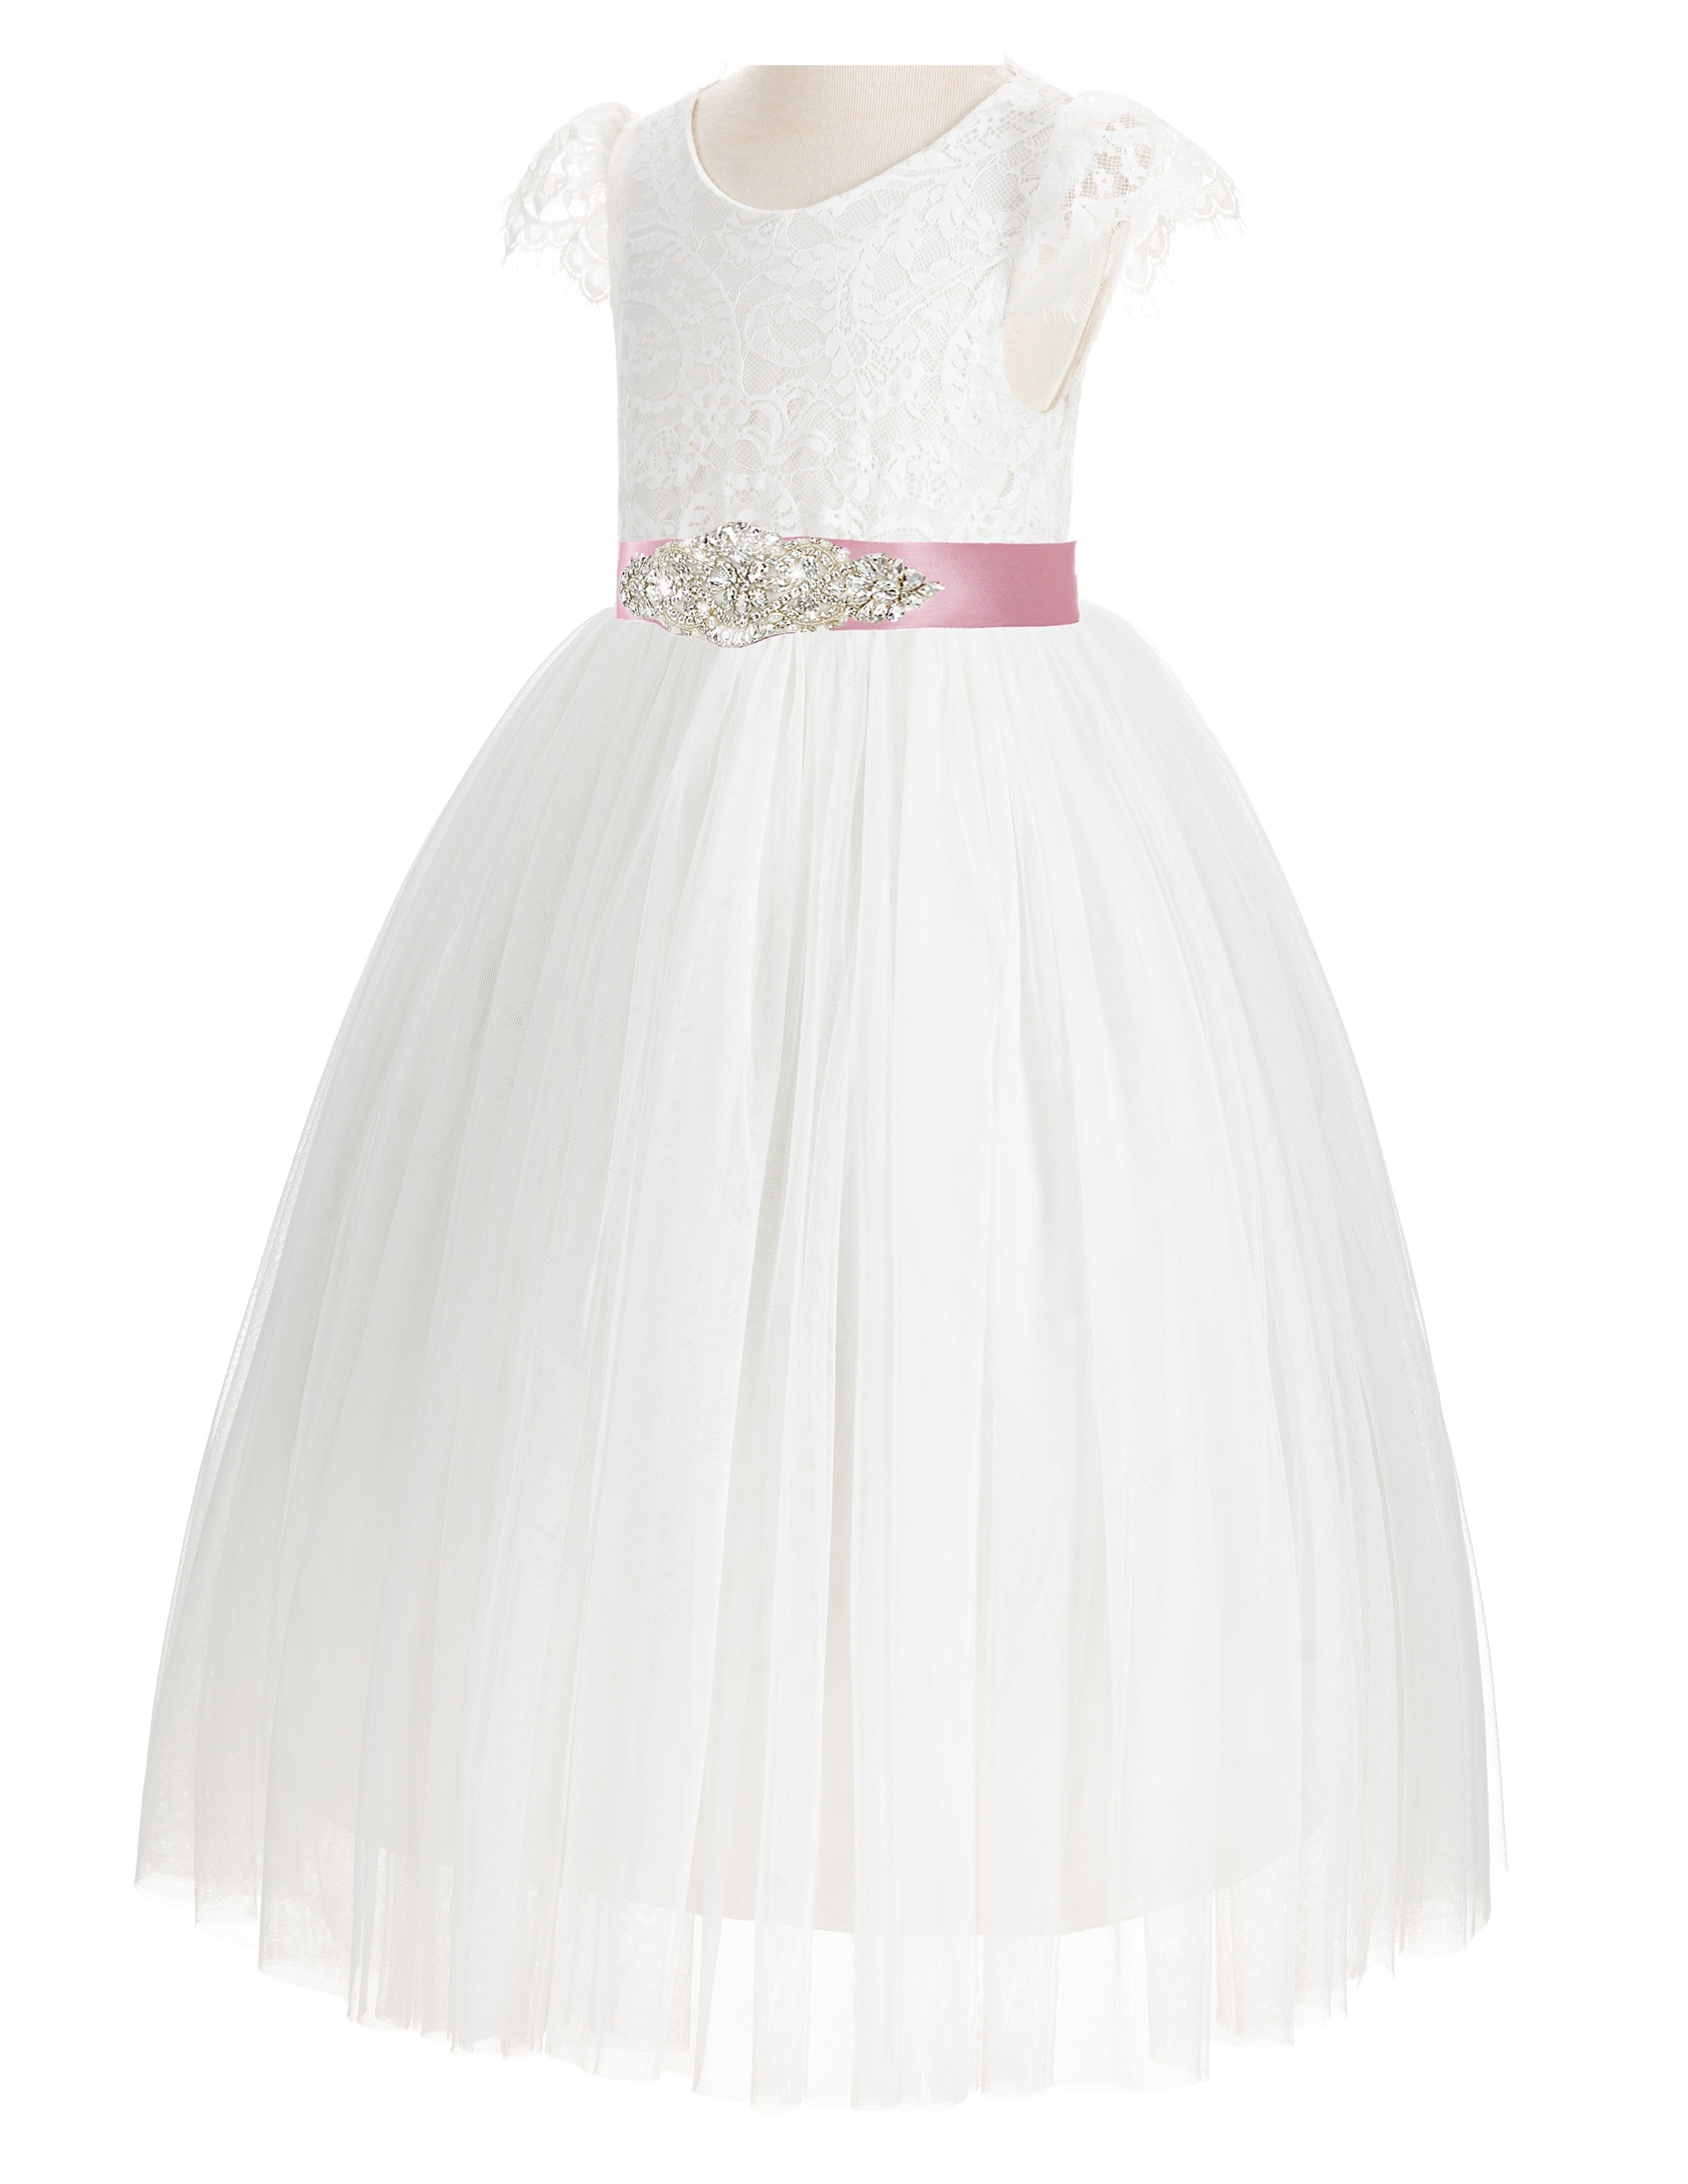 Ivory / Mauve Cap Sleeves Lace Flower Girl Dress V-Back Lace Dress 622R3